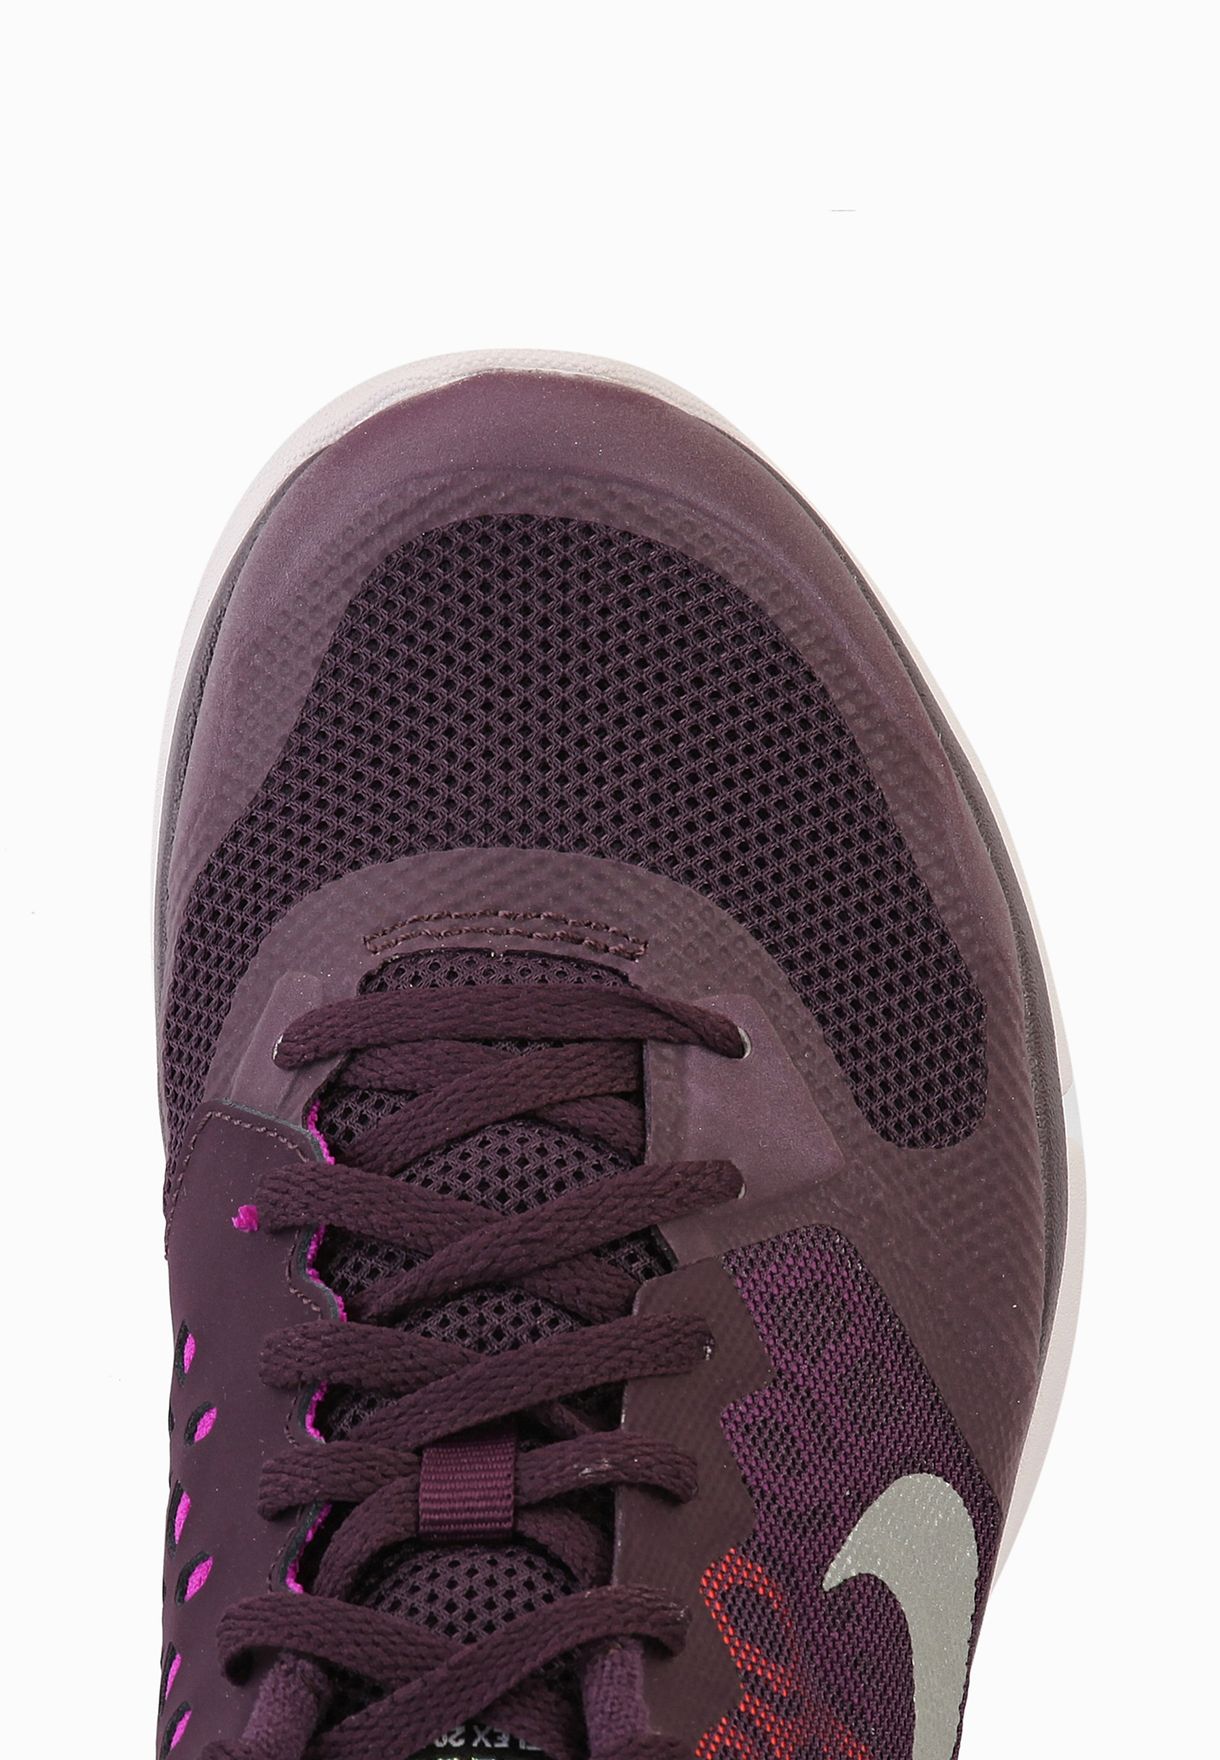 Buy Nike purple Flex 2015 Rn Flash for in MENA, Worldwide